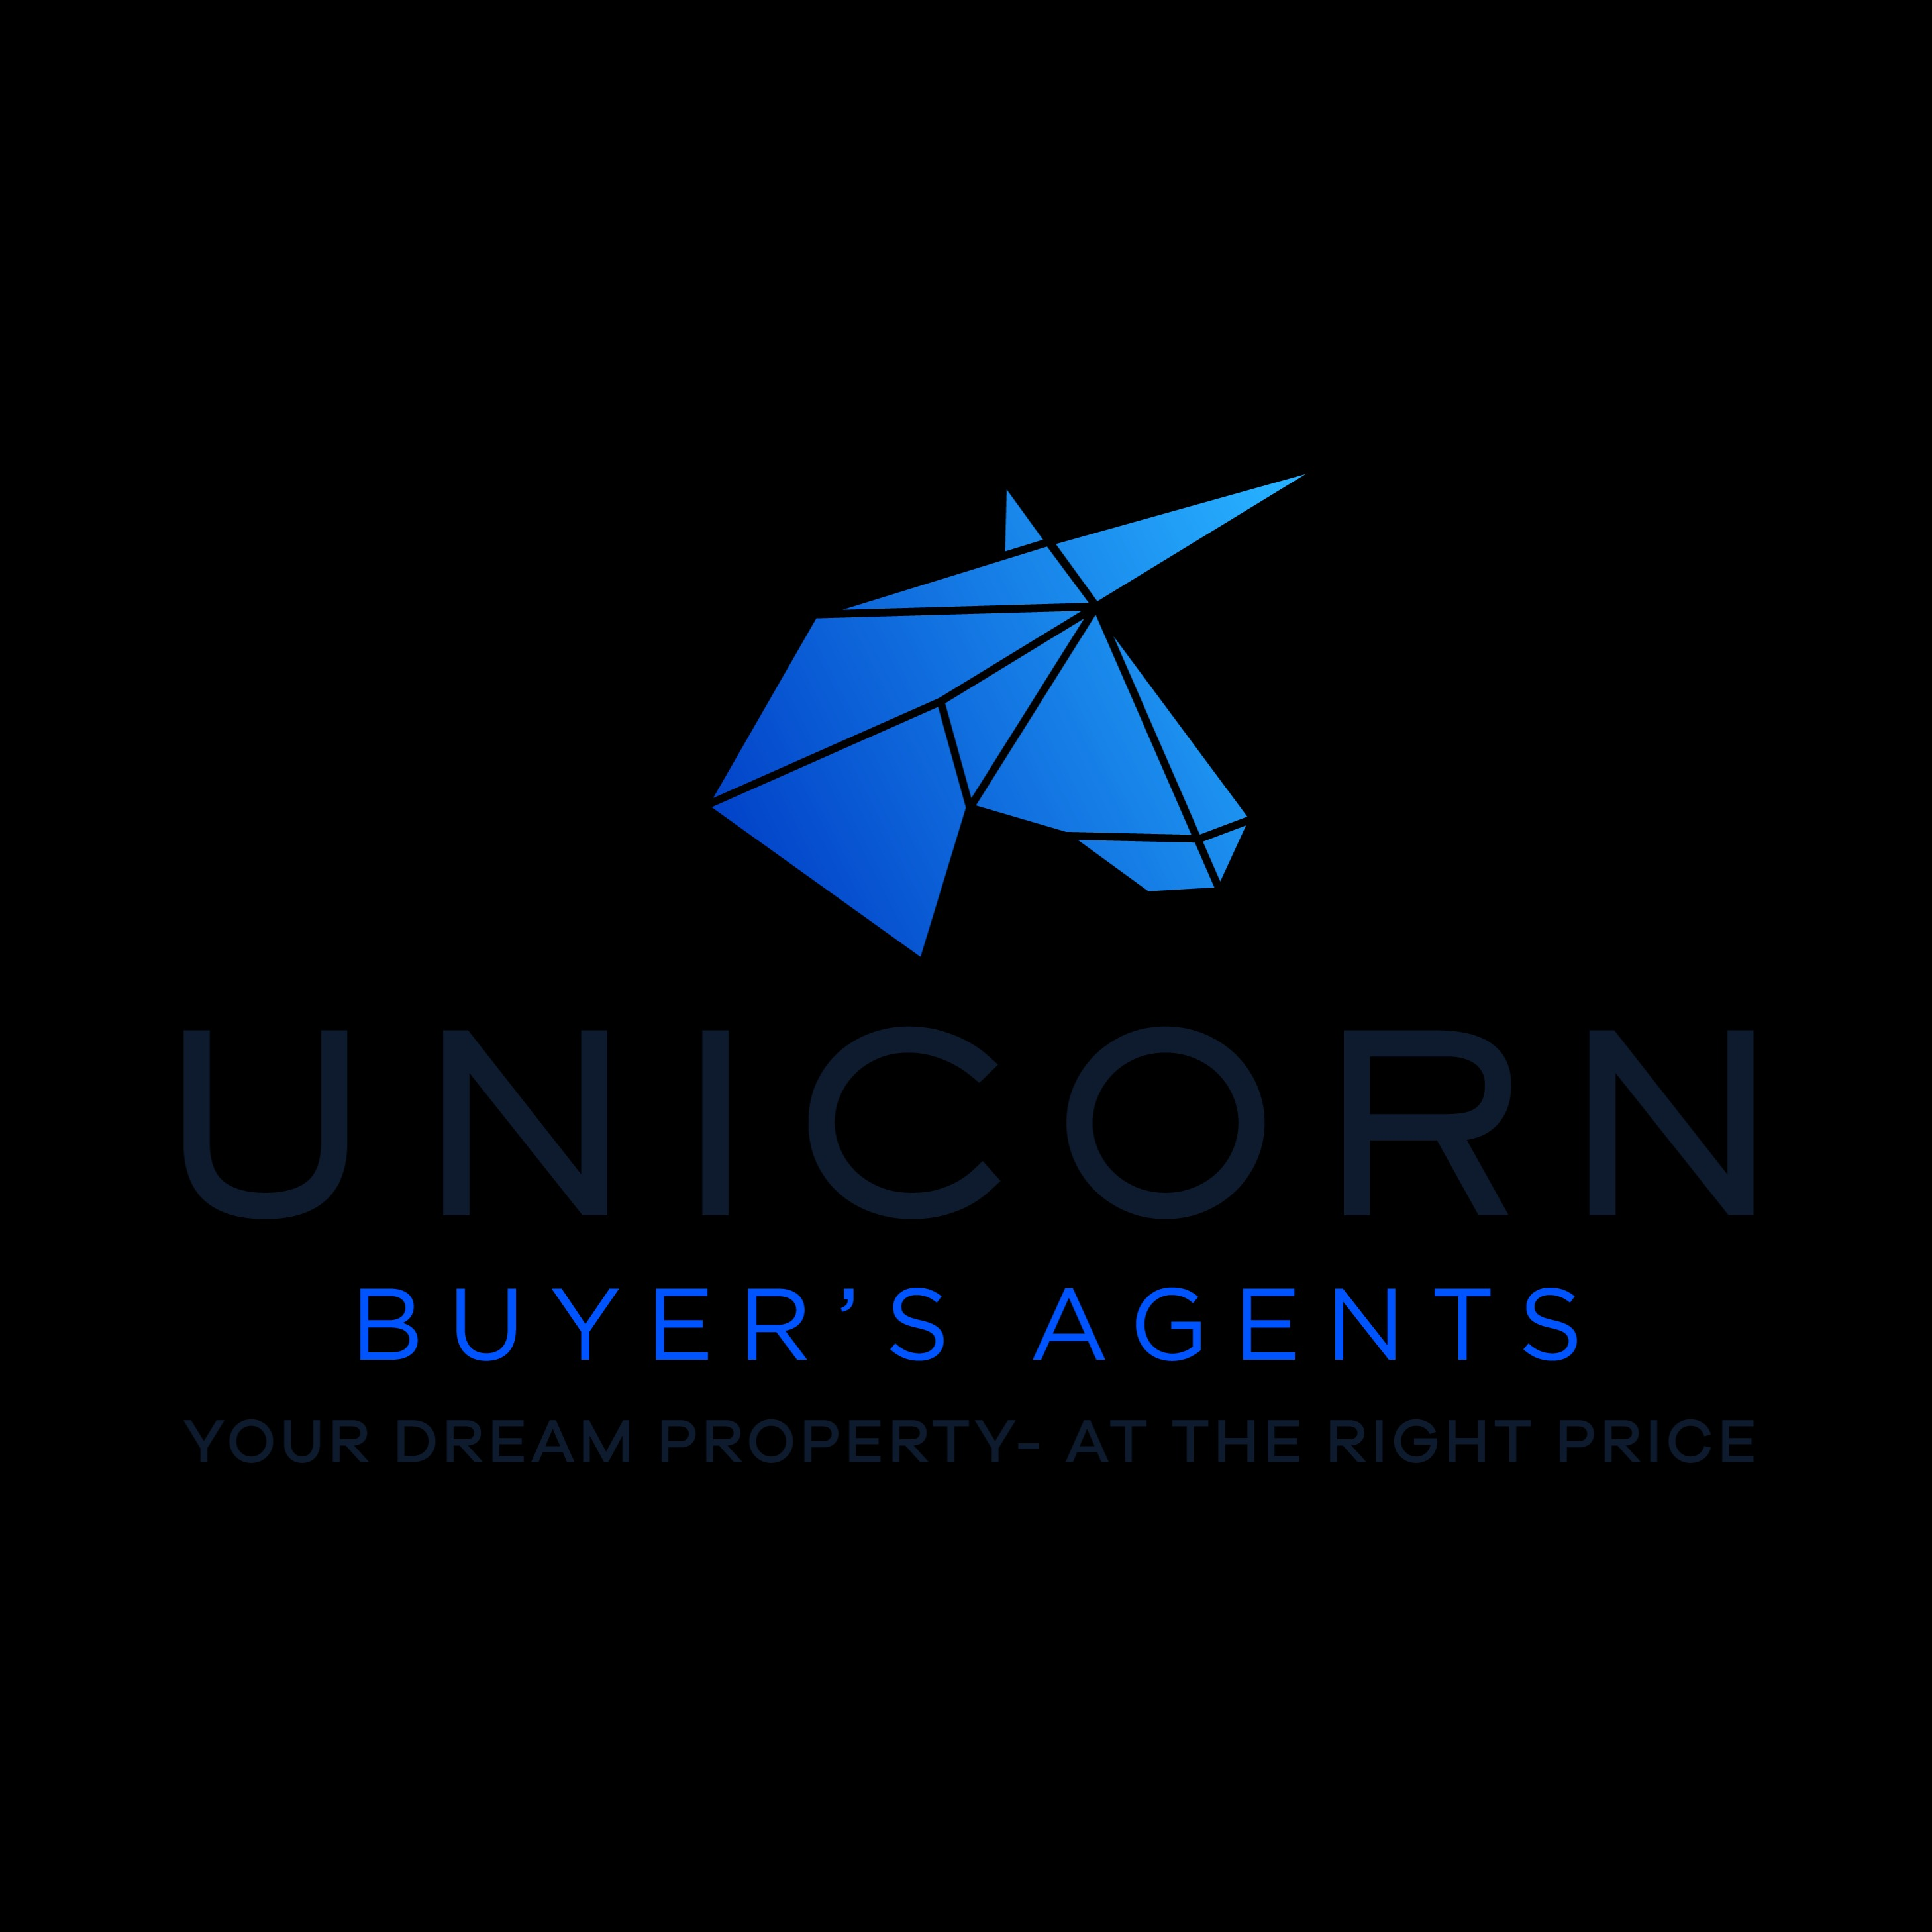 Unicorn Buyers Agents Sydney Sydney